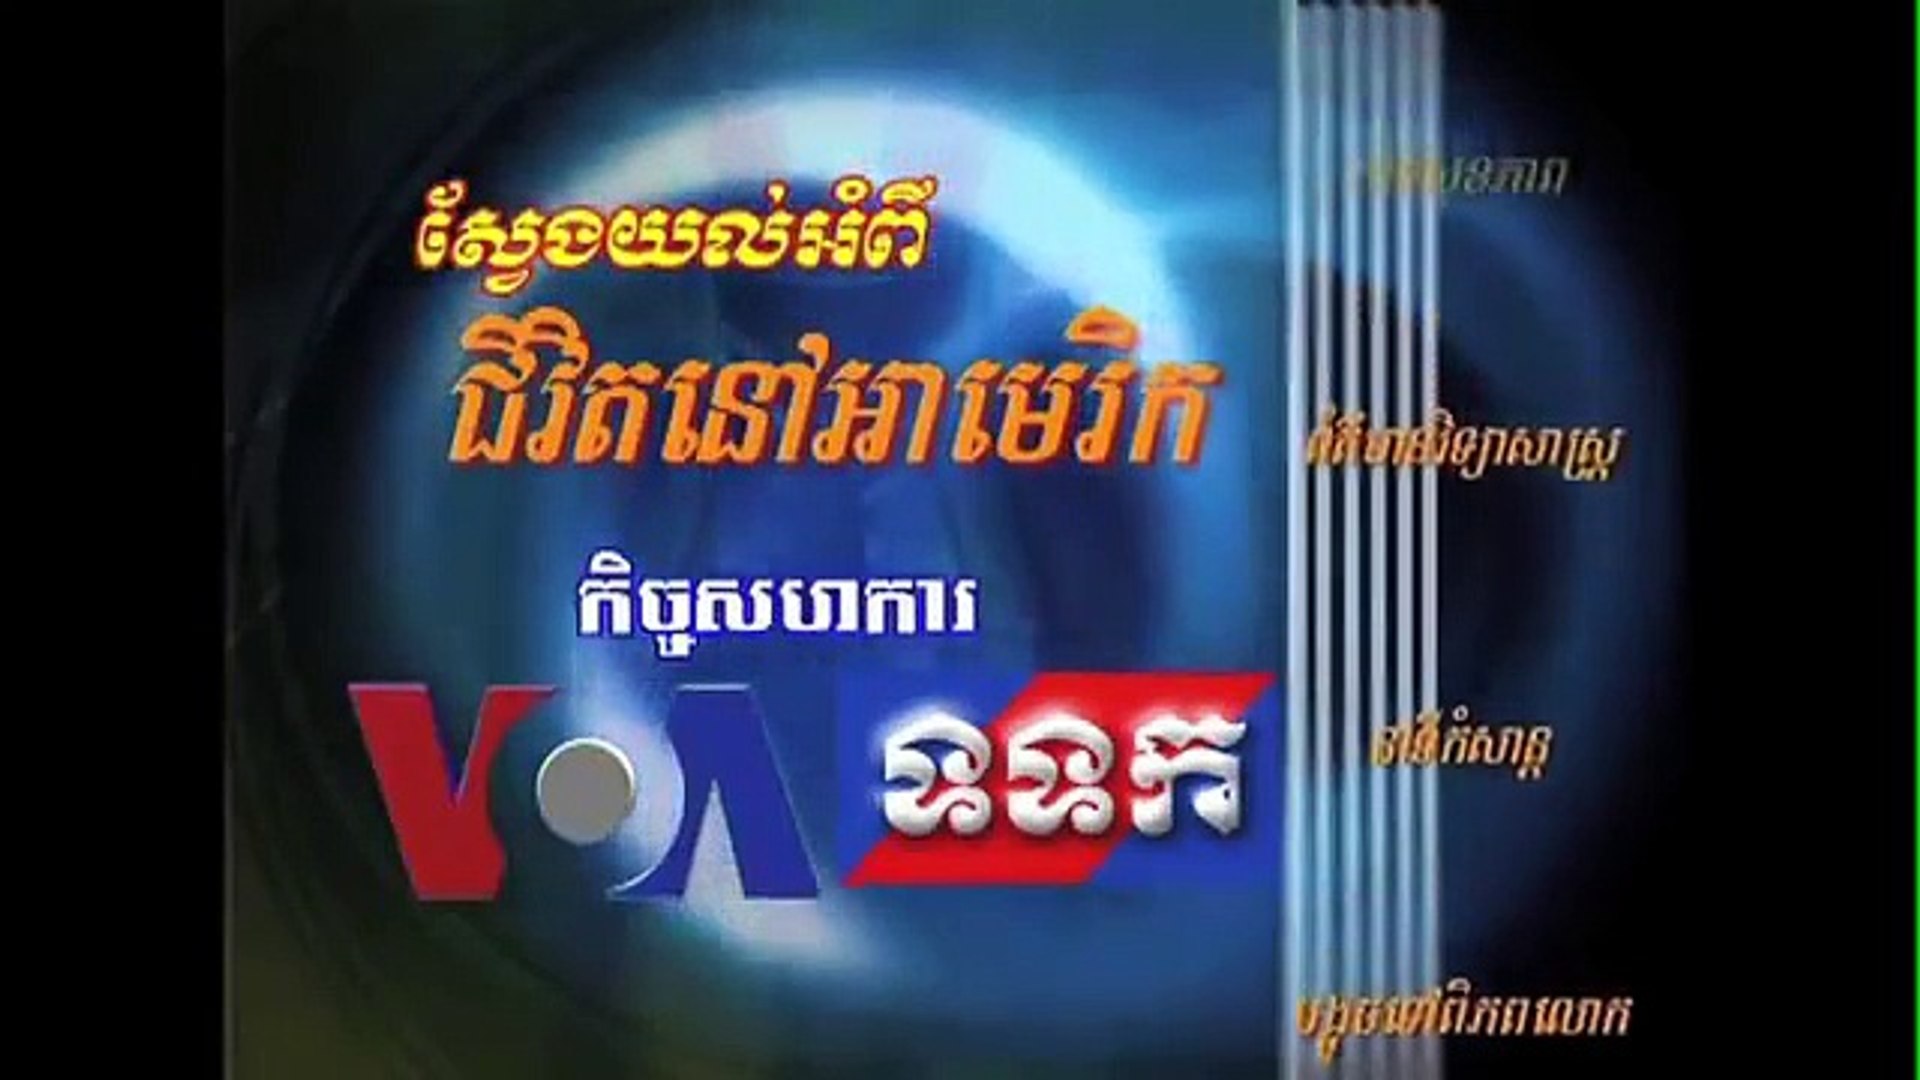 Cambodia News Today | VOA News Today